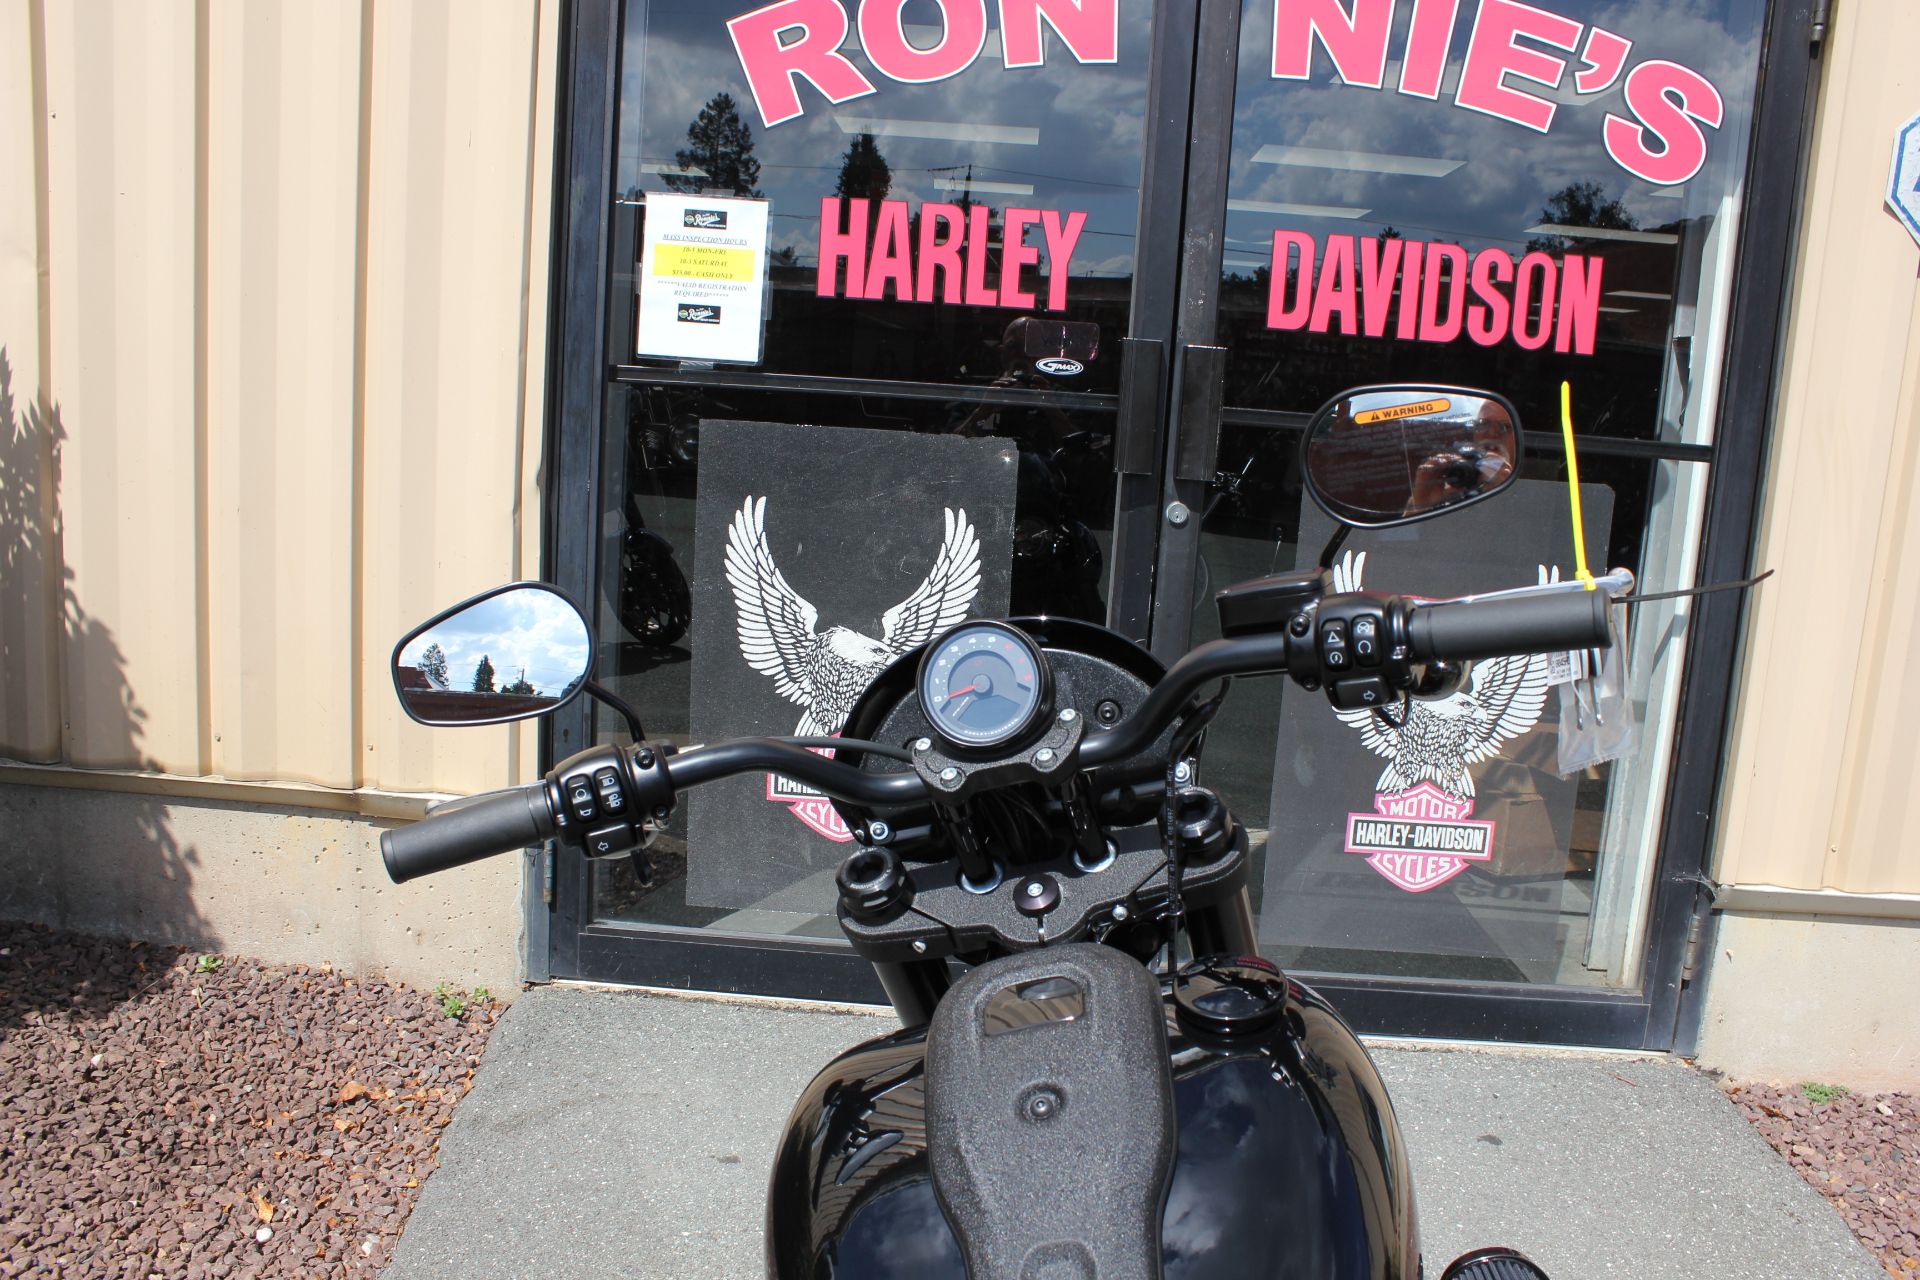 2022 Harley-Davidson Low Rider® S in Pittsfield, Massachusetts - Photo 7